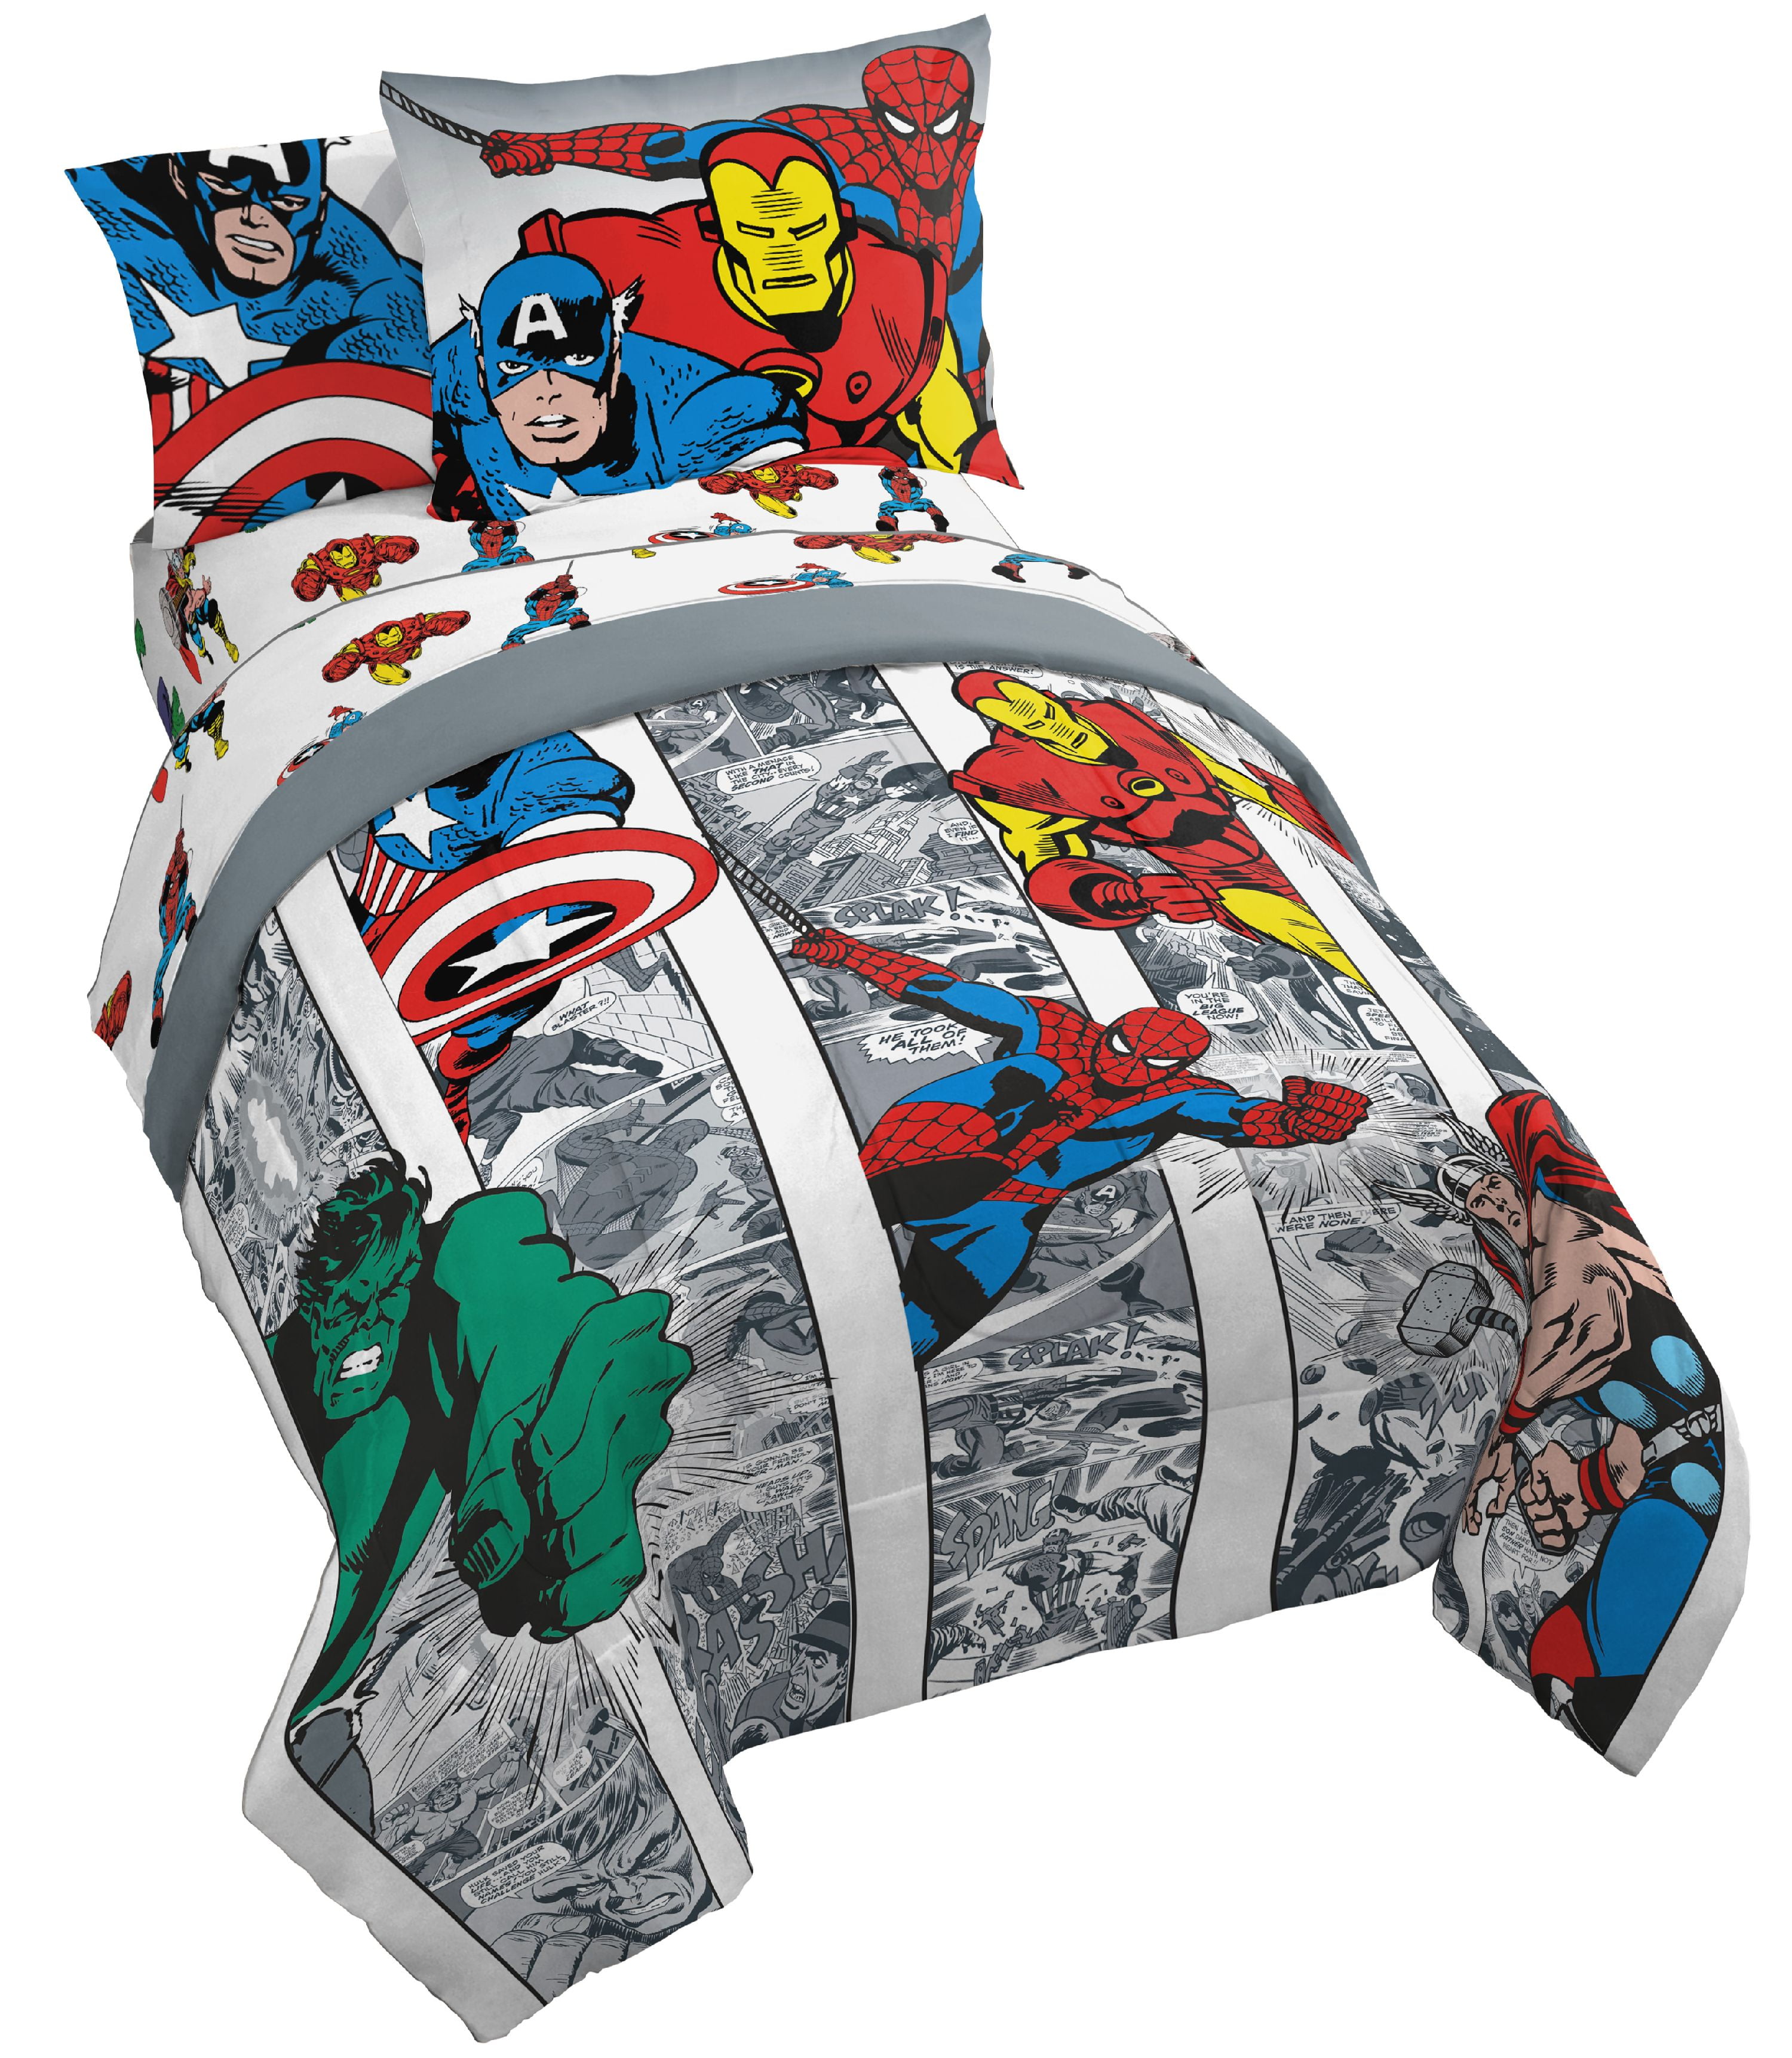 New Marvel Avengers Full Size Bed Sheet Set 4 Piece Superhero Bedding 